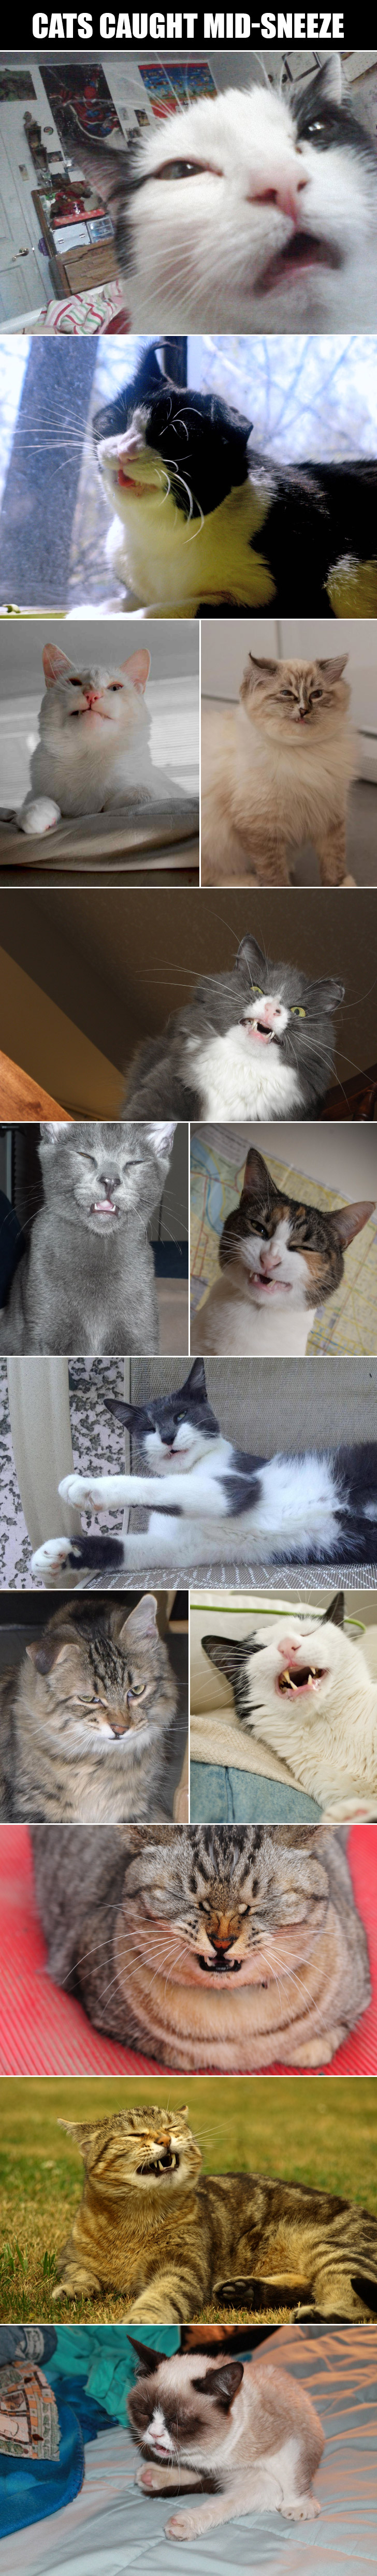 Cats caught mid-sneeze.